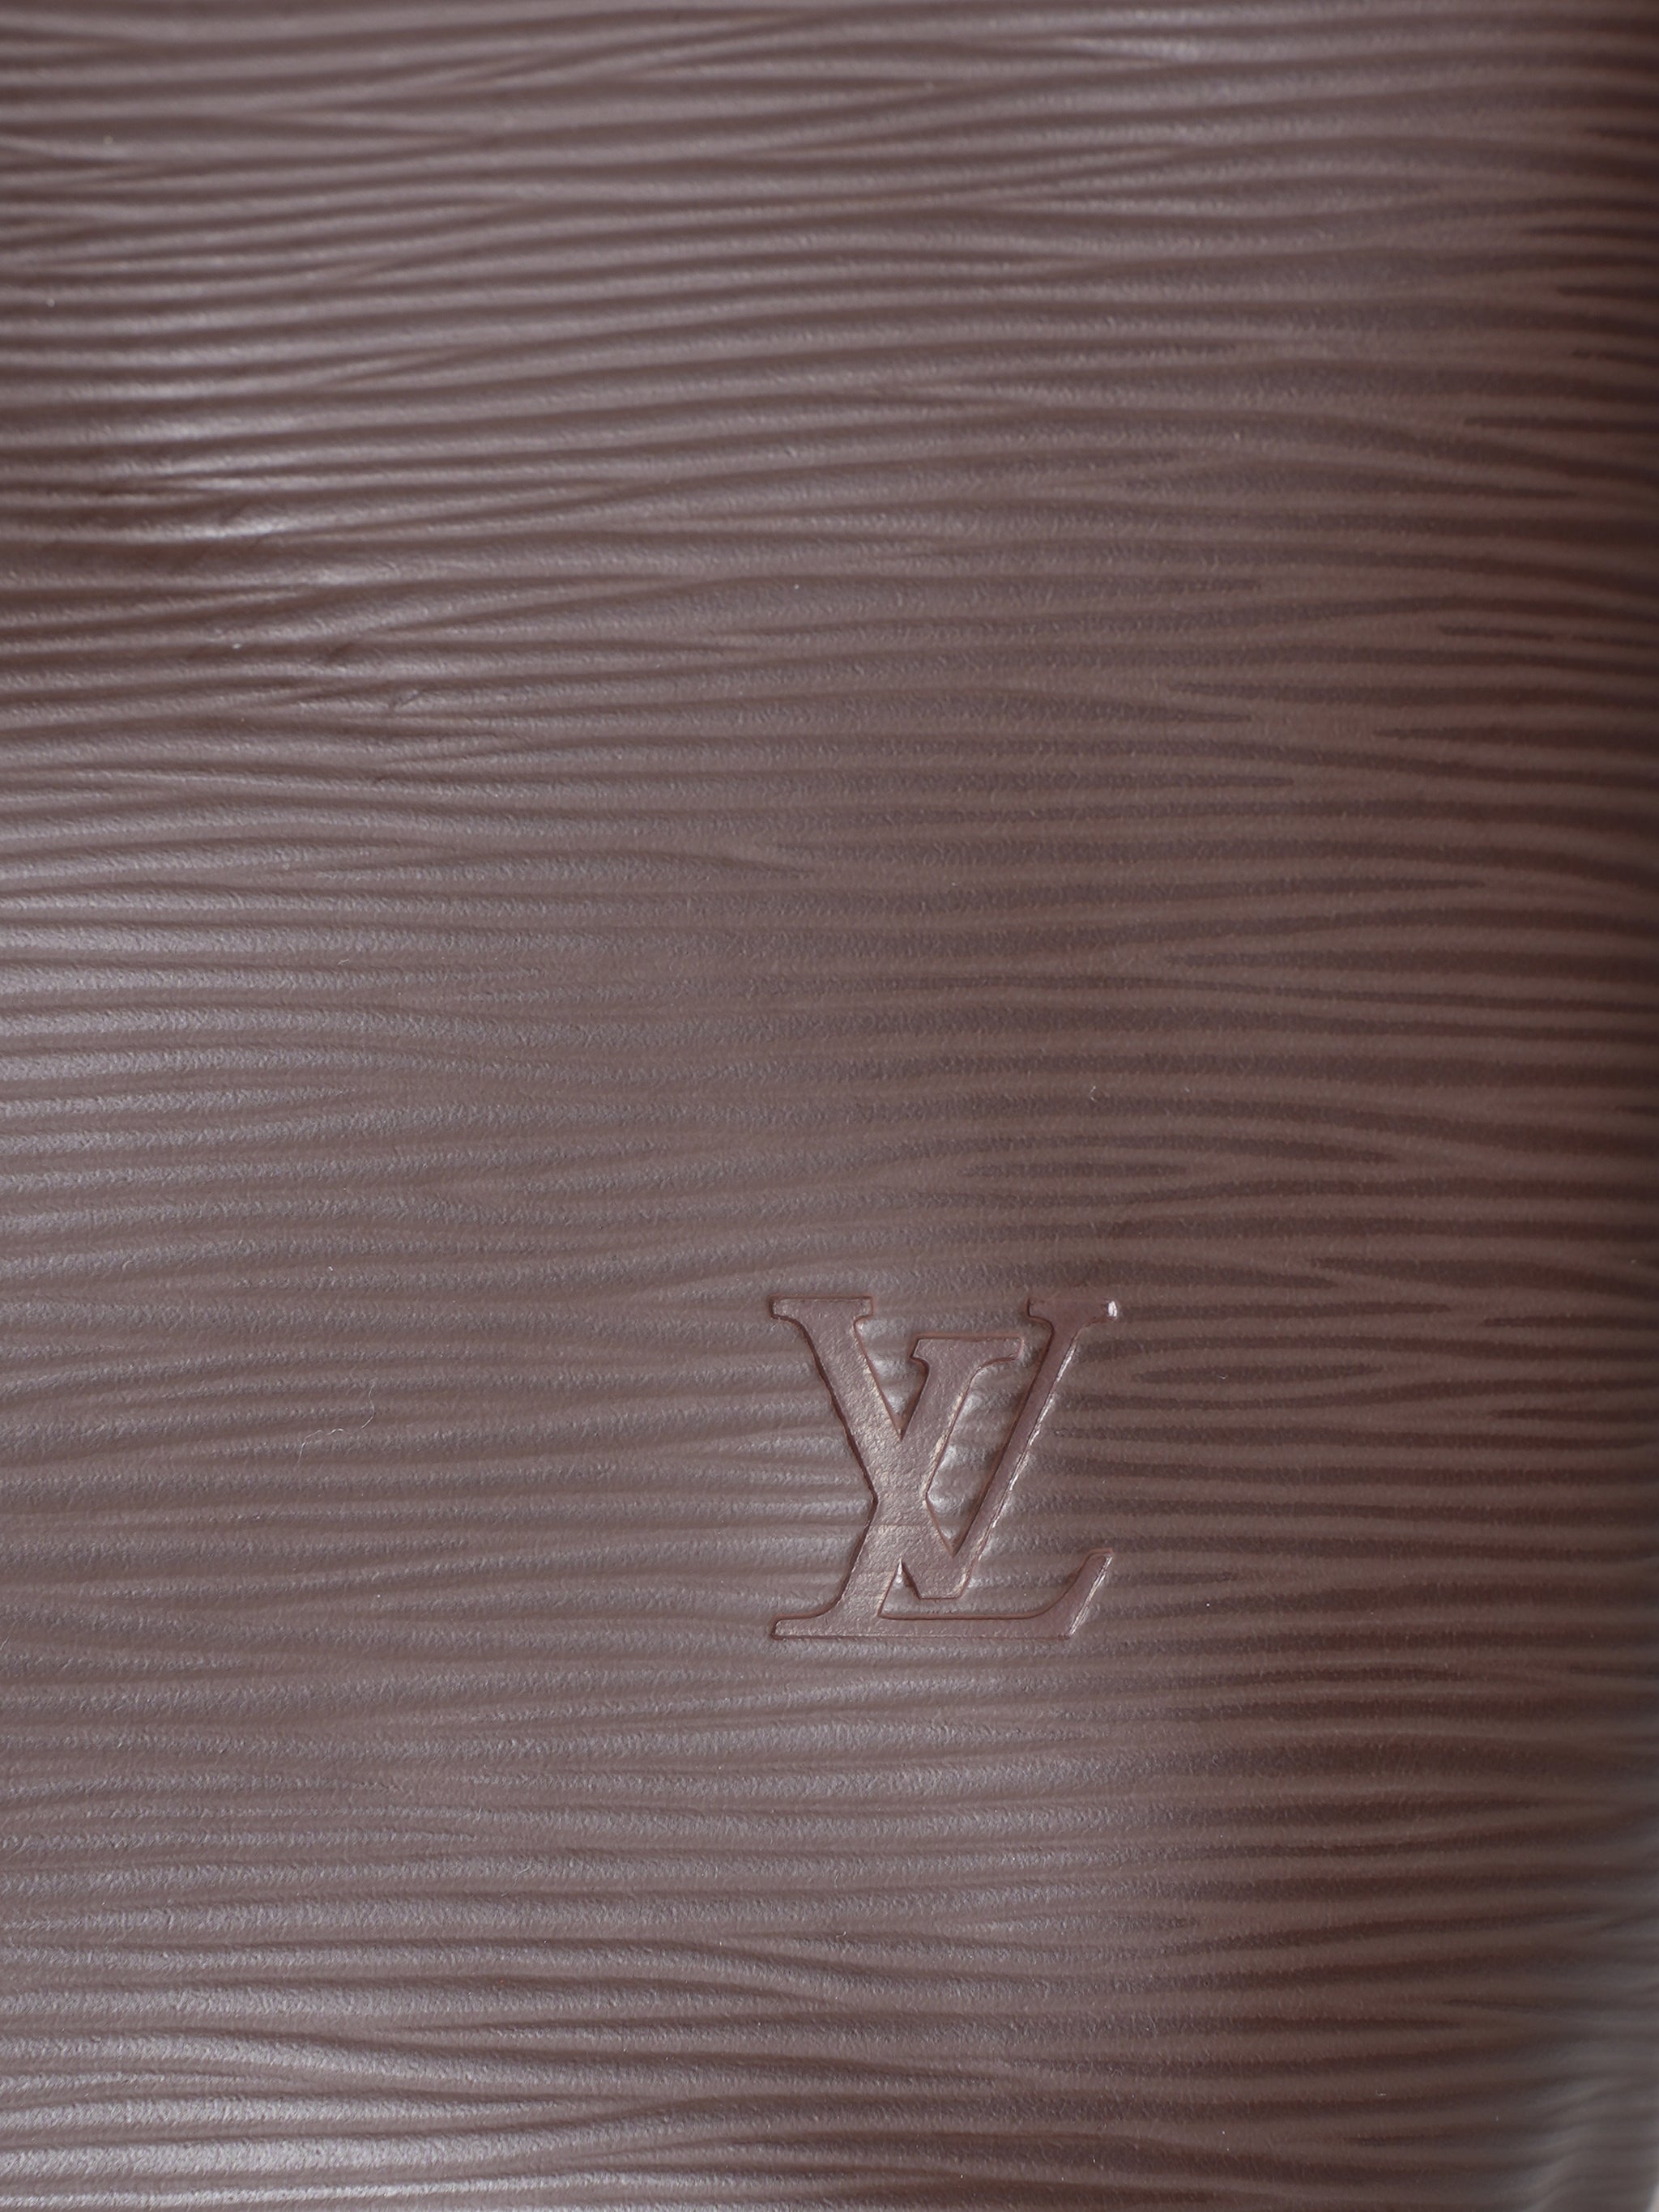 New Louis Vuitton Bag